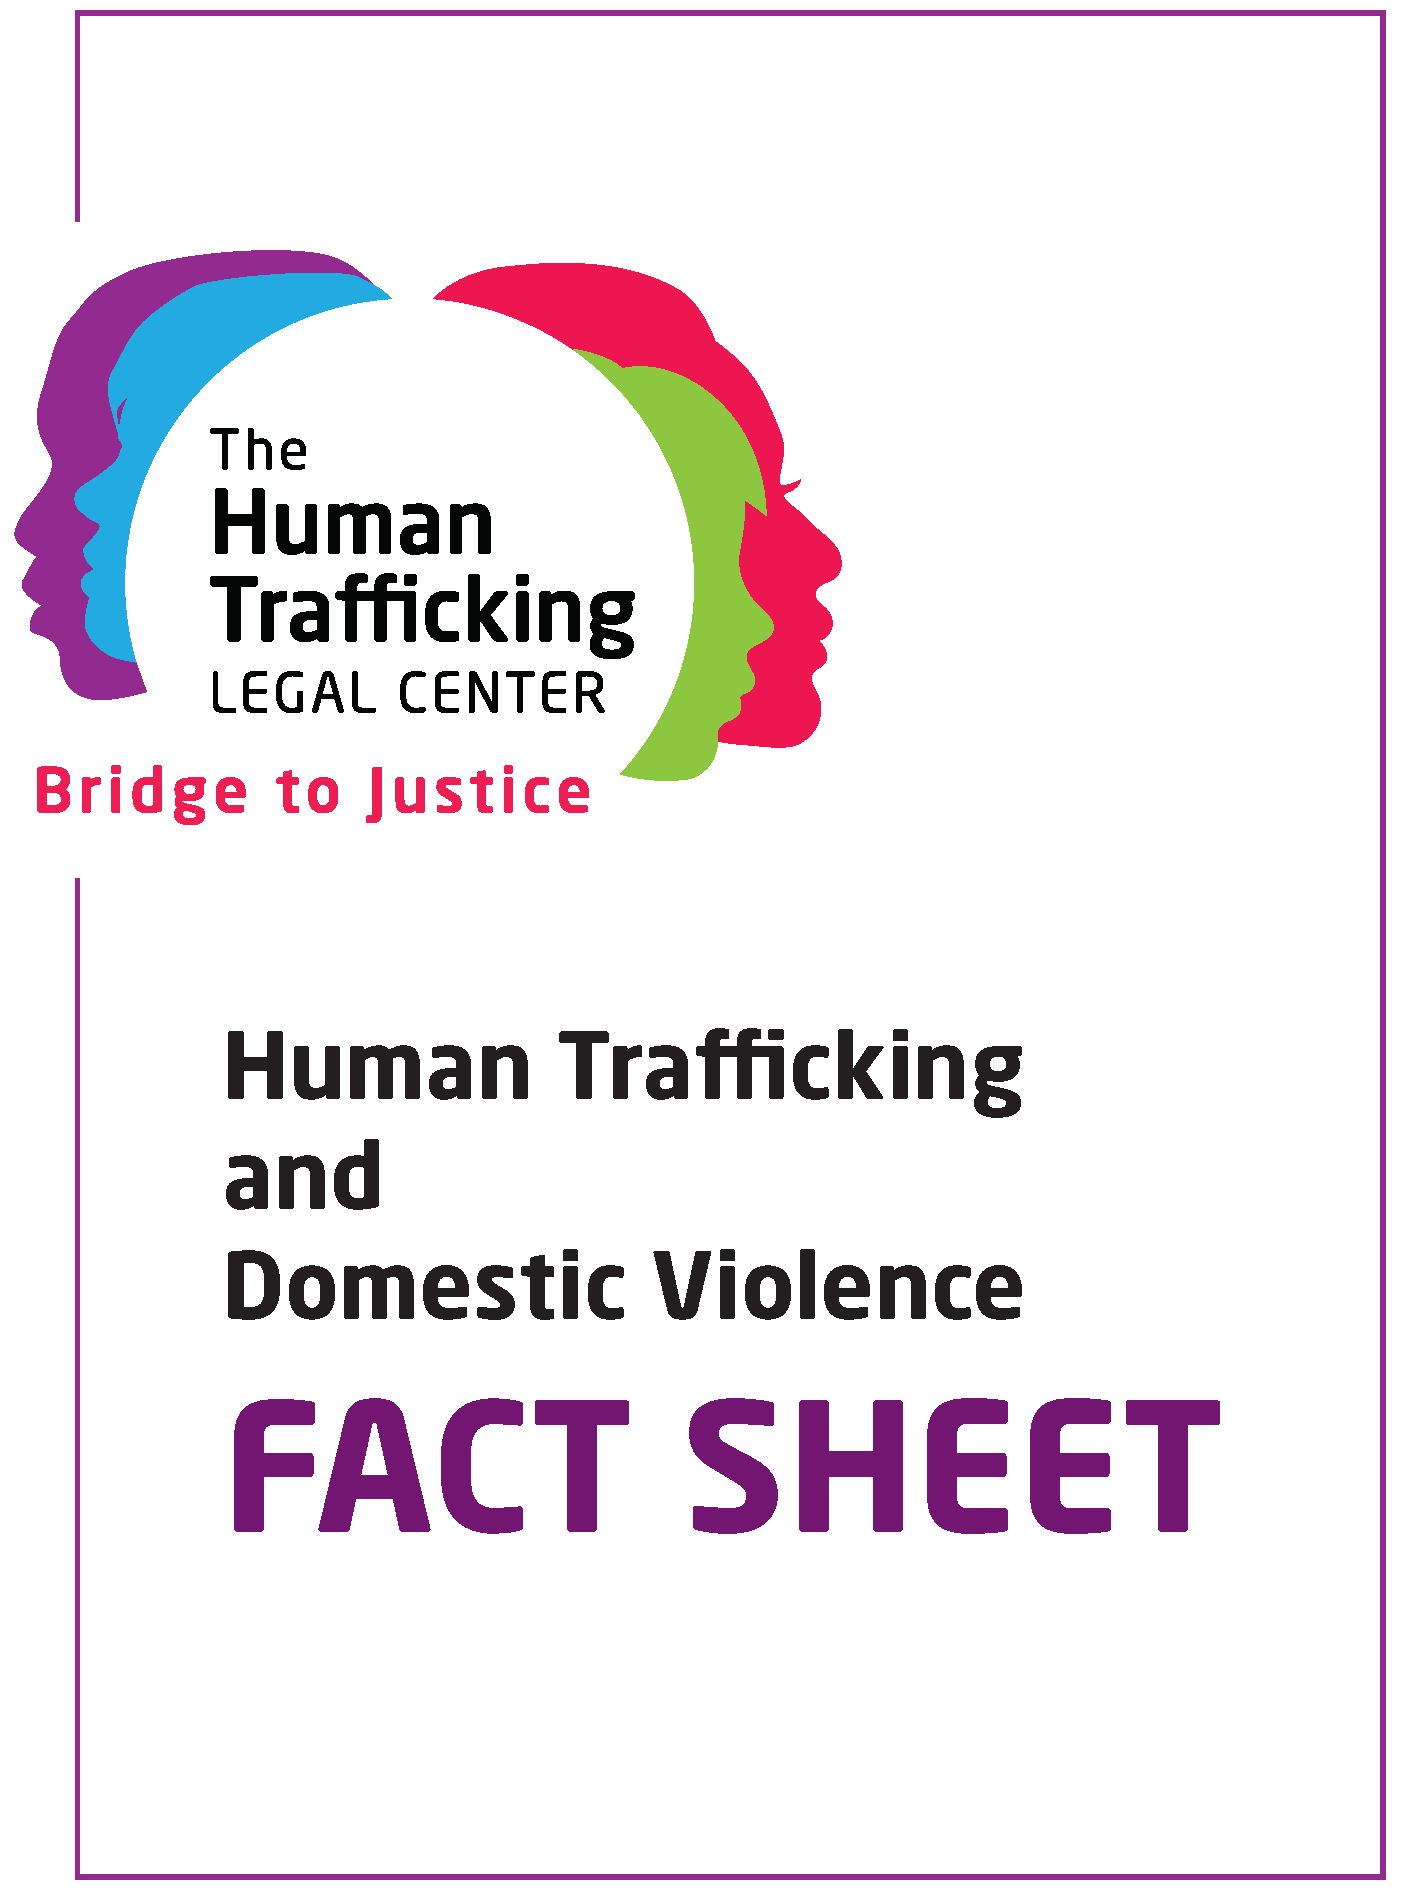 Human Trafficking and Domestic Violence: Fact Sheet